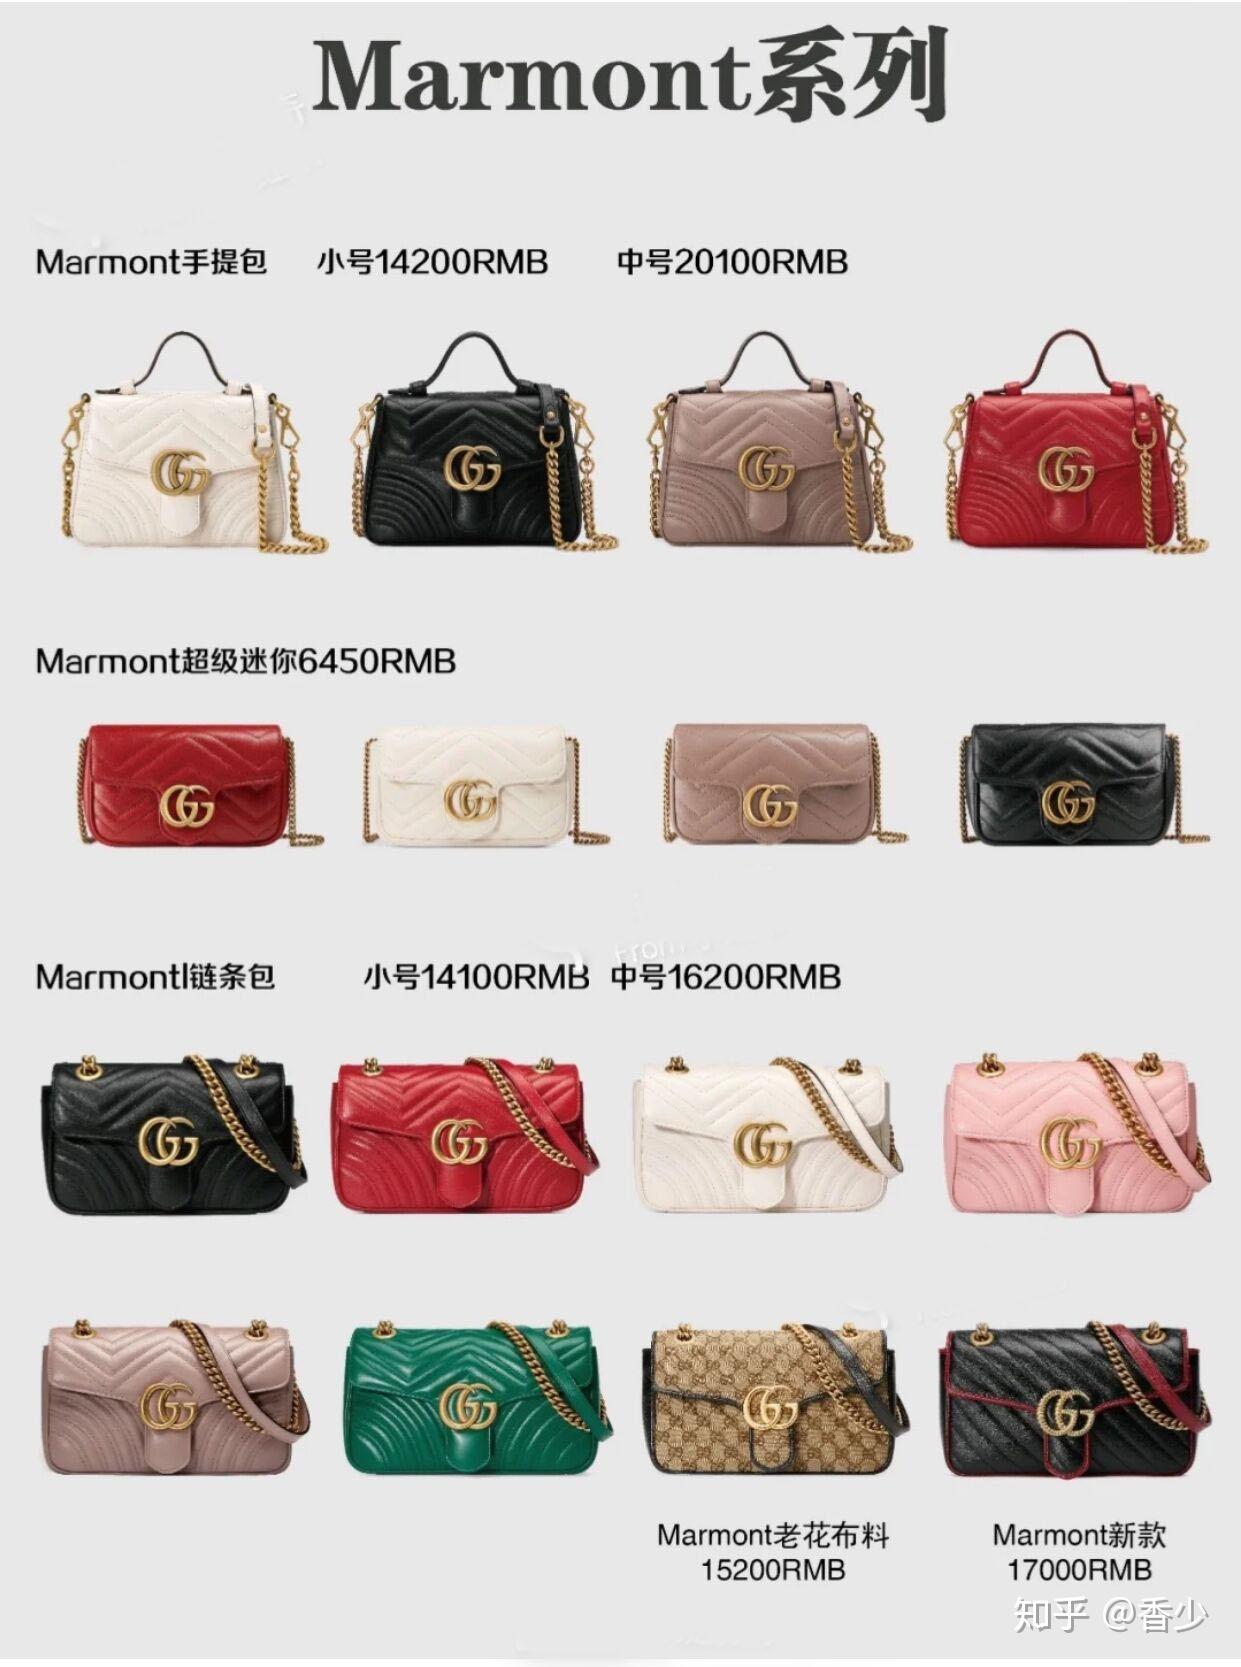 DIOR包包哪款好看？Lady七格老虎刺绣系列包包 DIOR中国官网包包图片 - 七七奢侈品